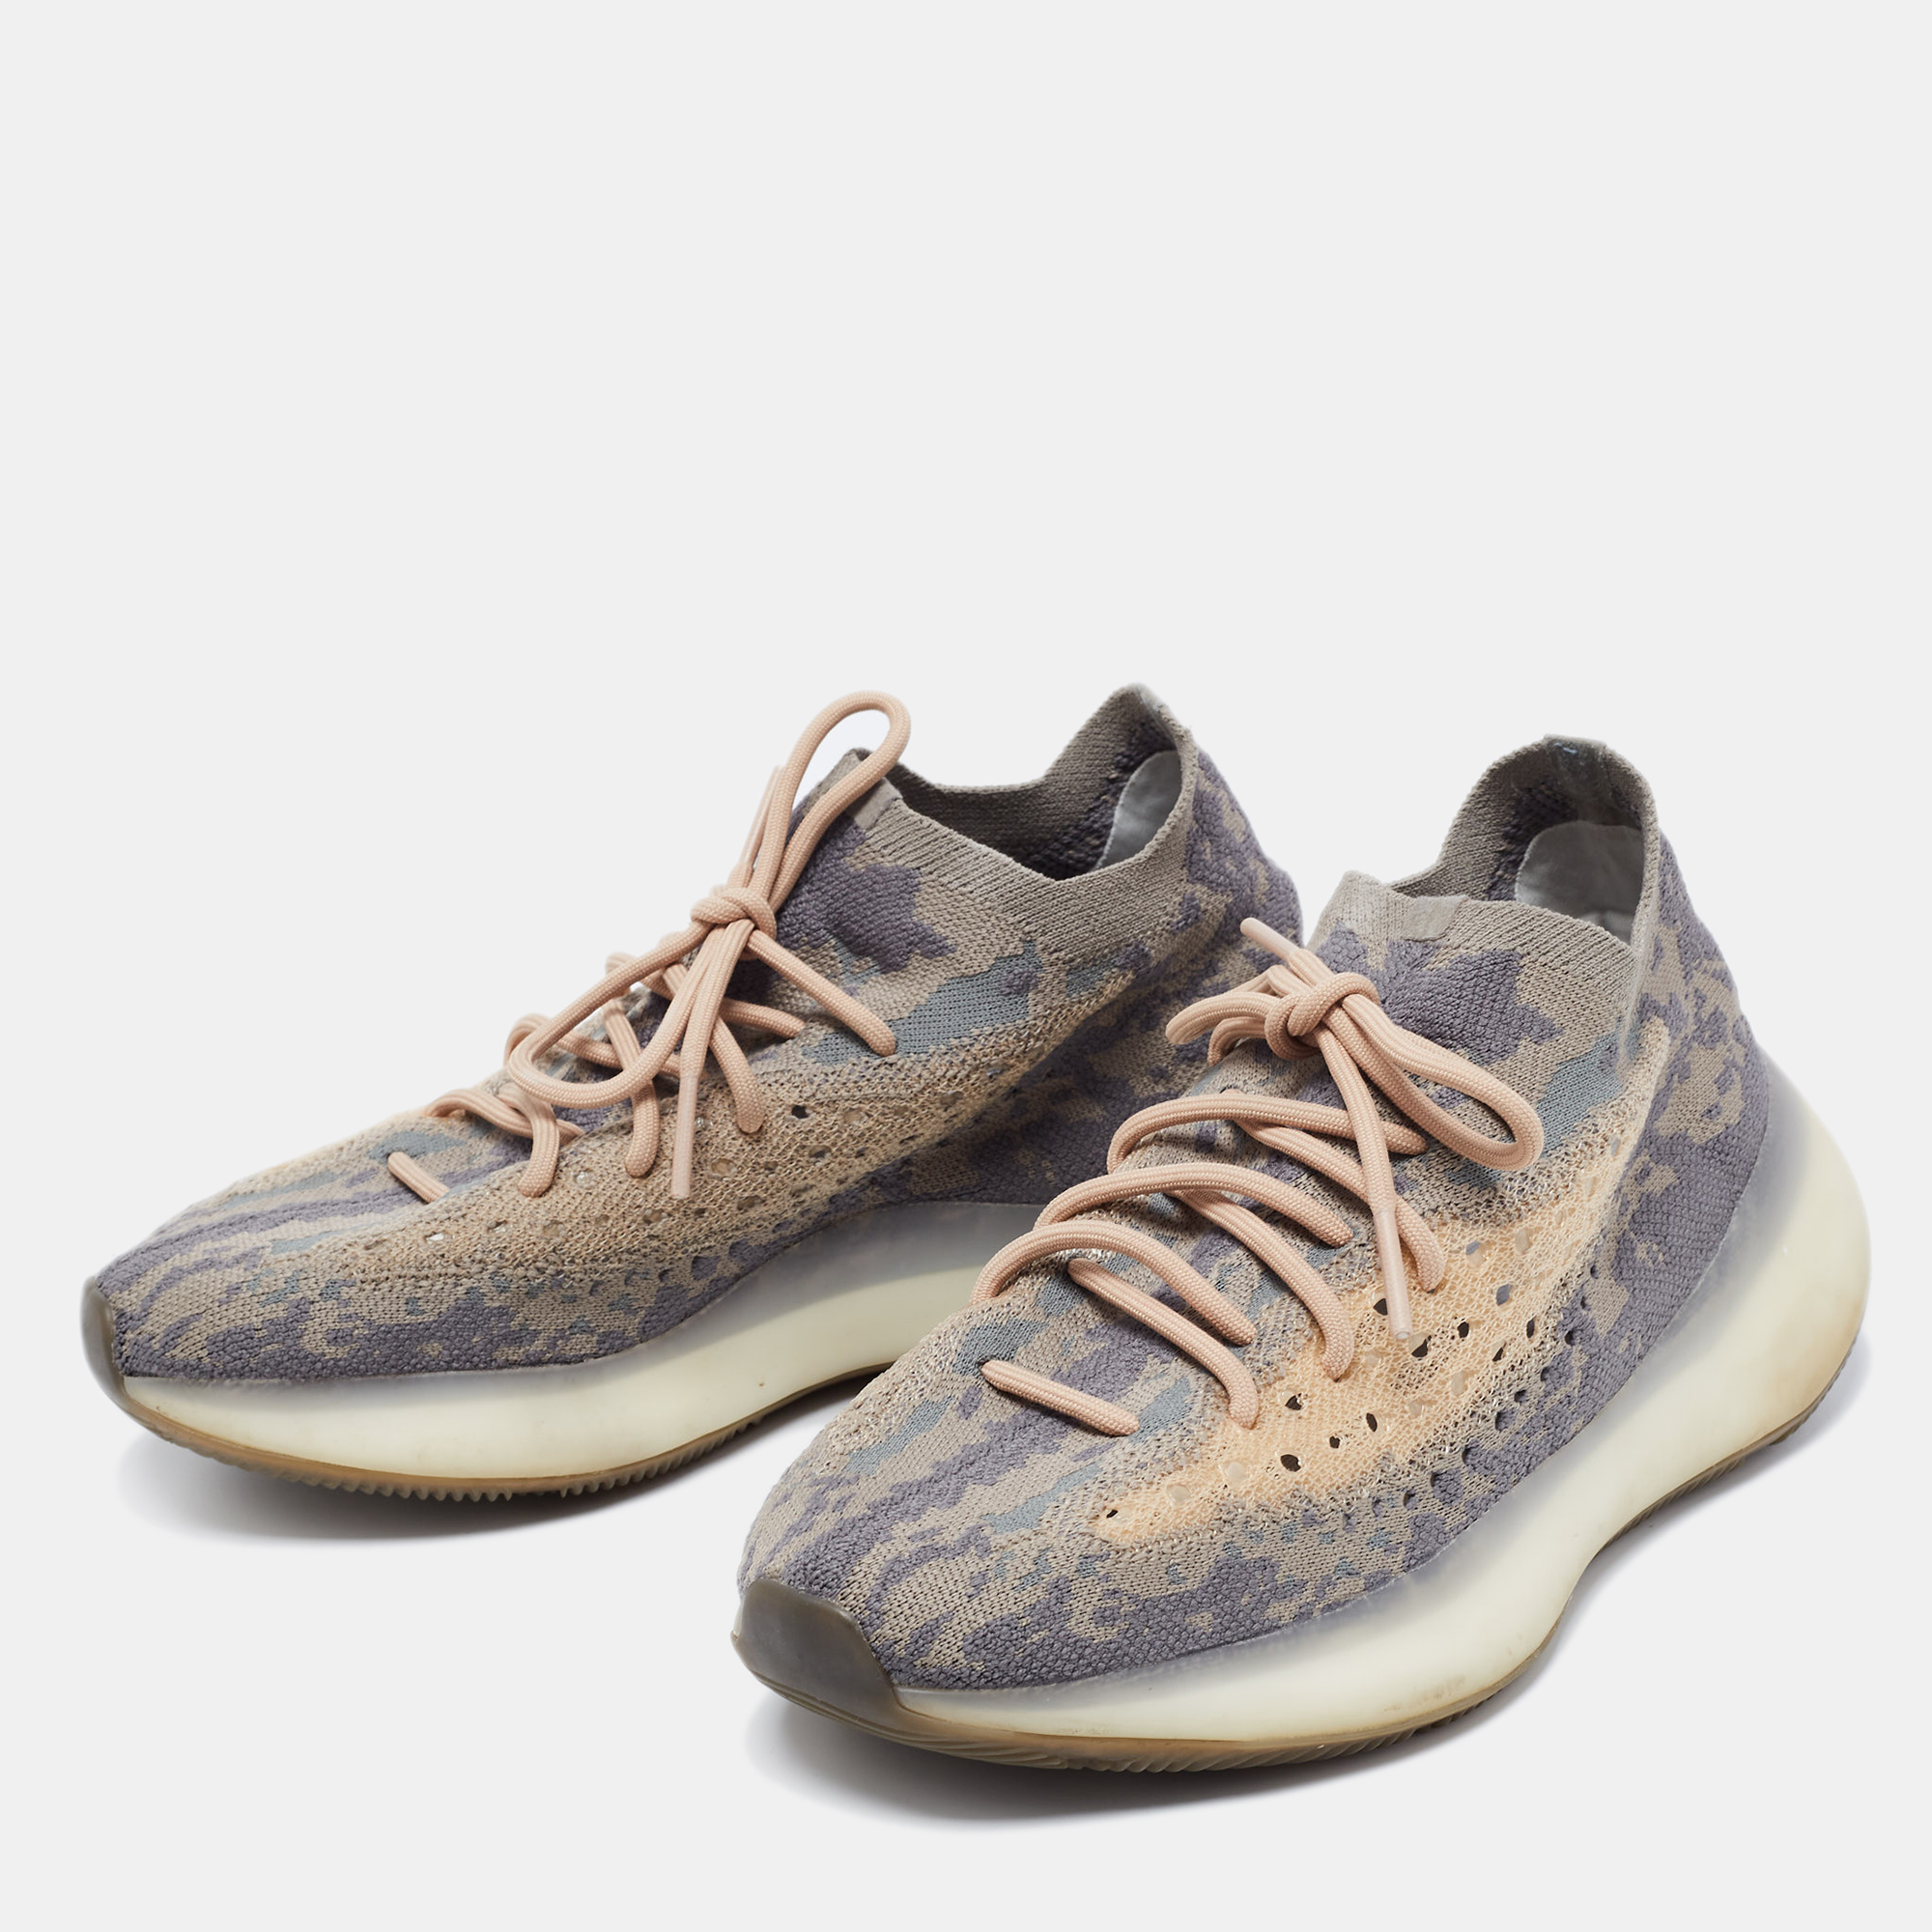 

Yeezy x adidas Grey/Beige Knit Fabric Boost 380 Mist Low-Top Sneakers Size 43 1/3